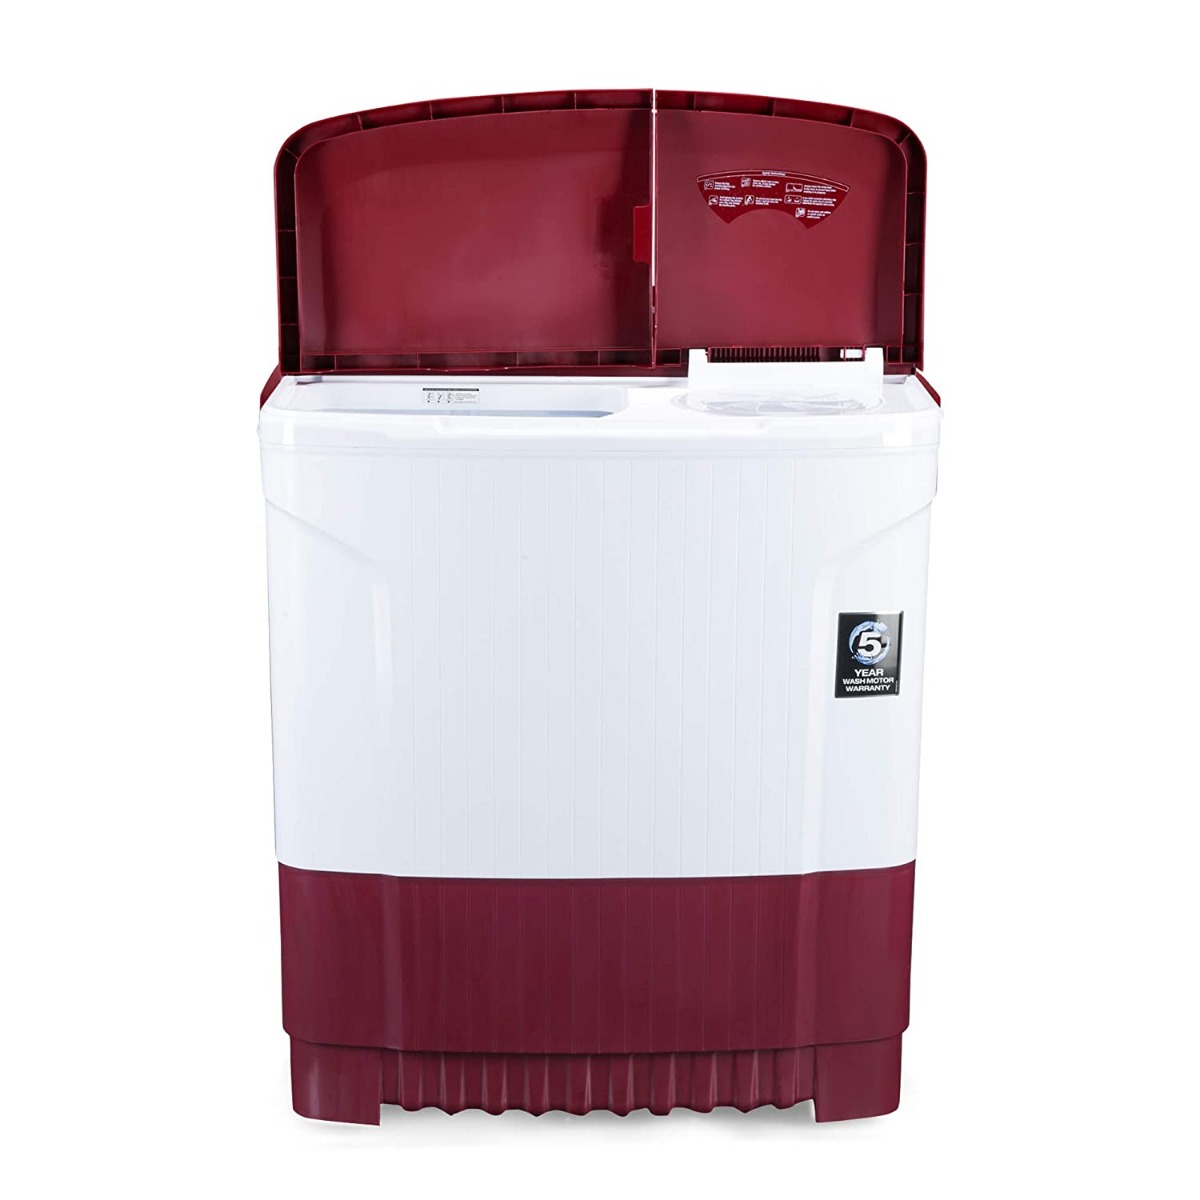 Godrej 8 Kg 5 Star Semi Automatic Washing Machine (WSEDGECLS805.0SN2MWNRD, Wine Red)-12713